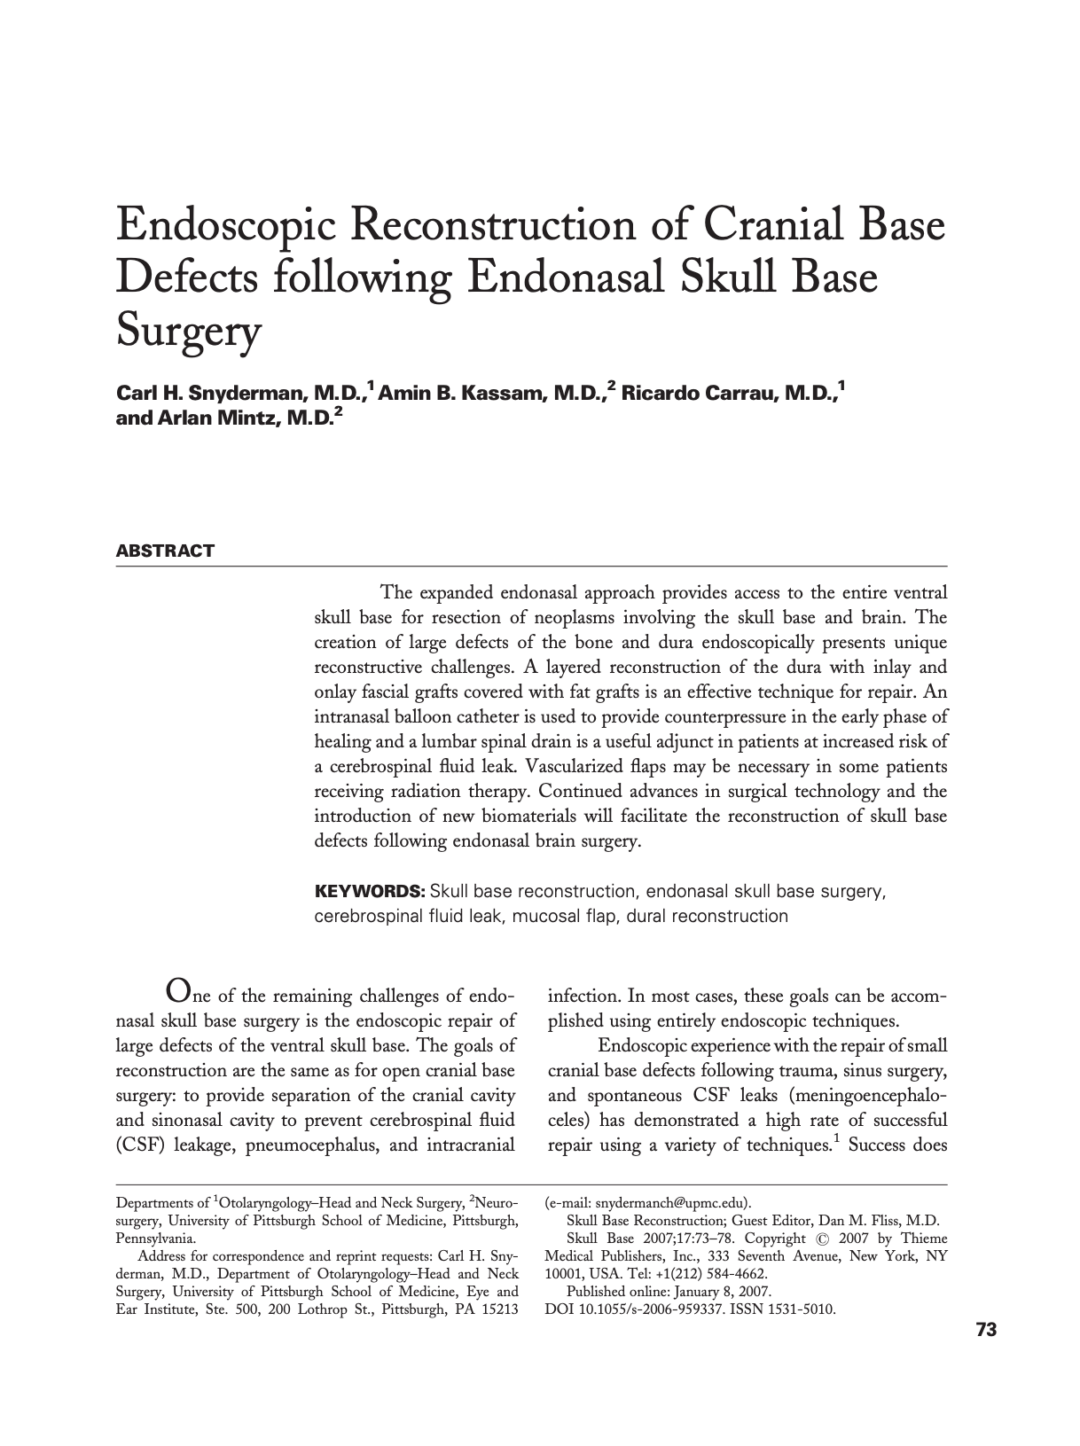 Endoscopic Reconstruction of Cranial Base Defects following Endonasal Skull Base Surgery